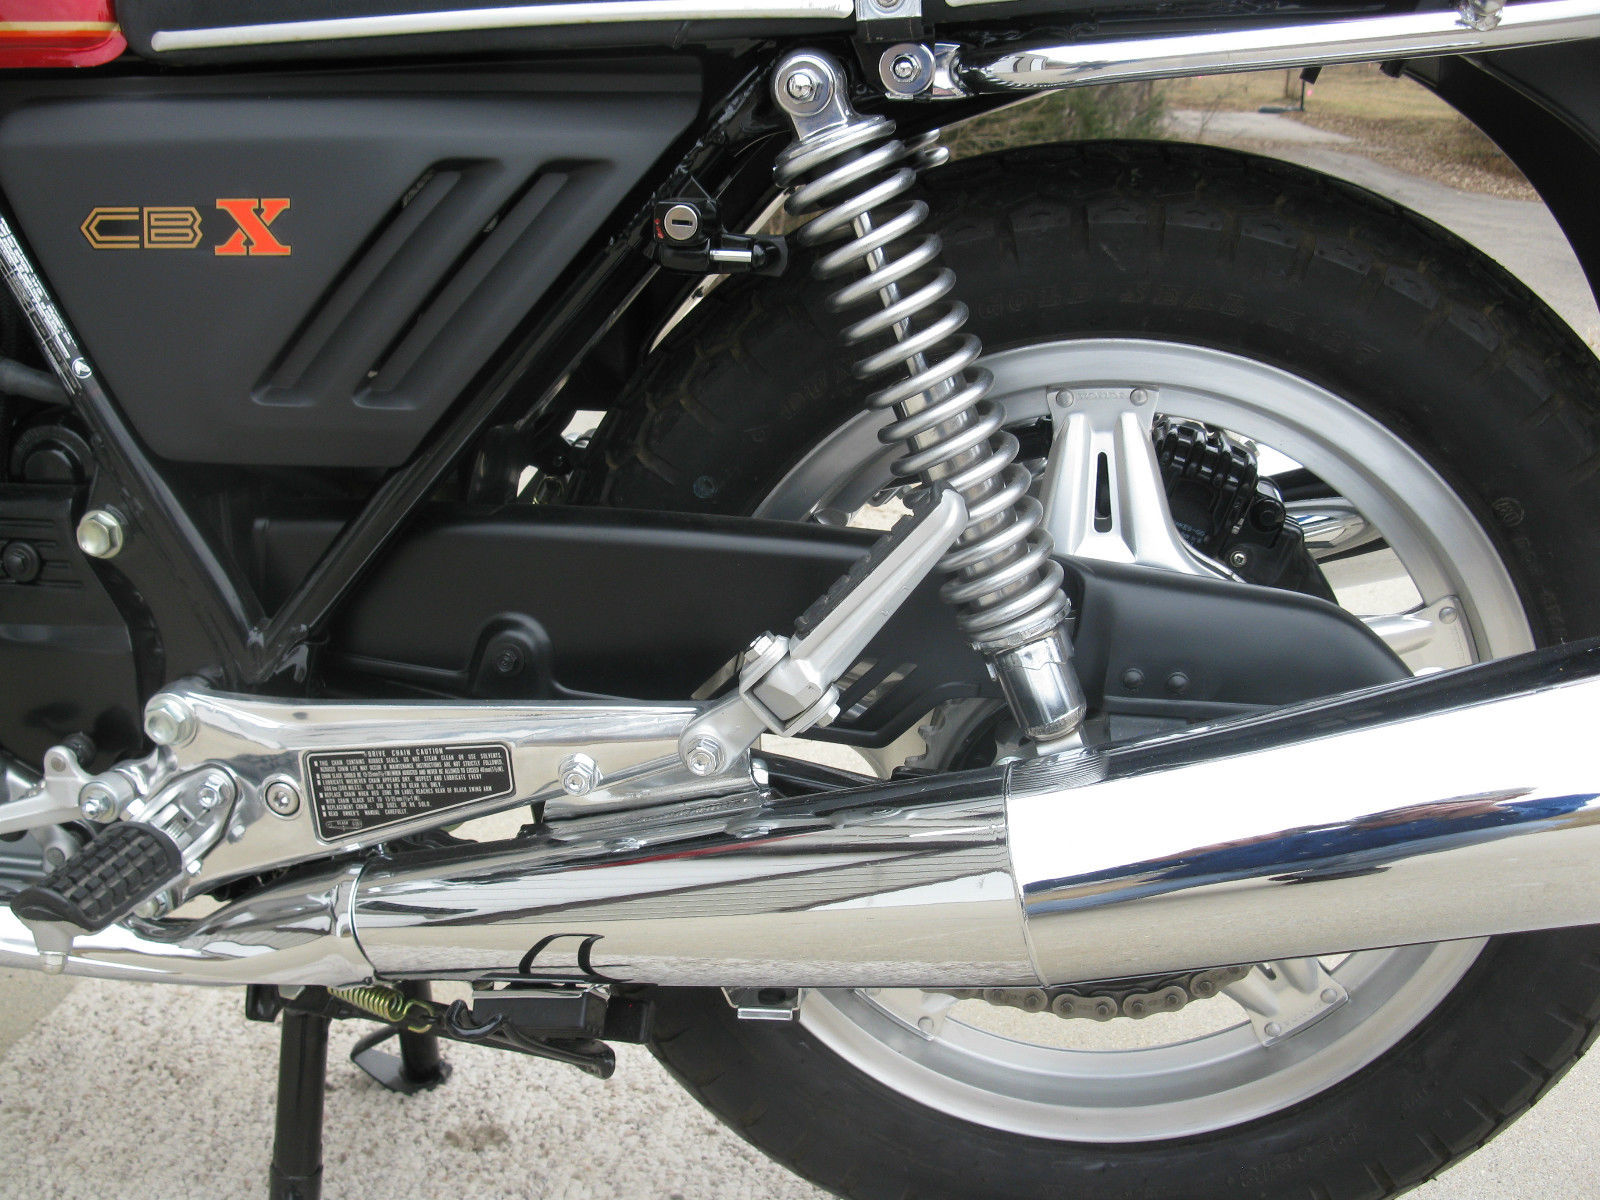 Honda CBX1000 - 1979 - Comstar Wheel, Exhaust and Rear Brake.